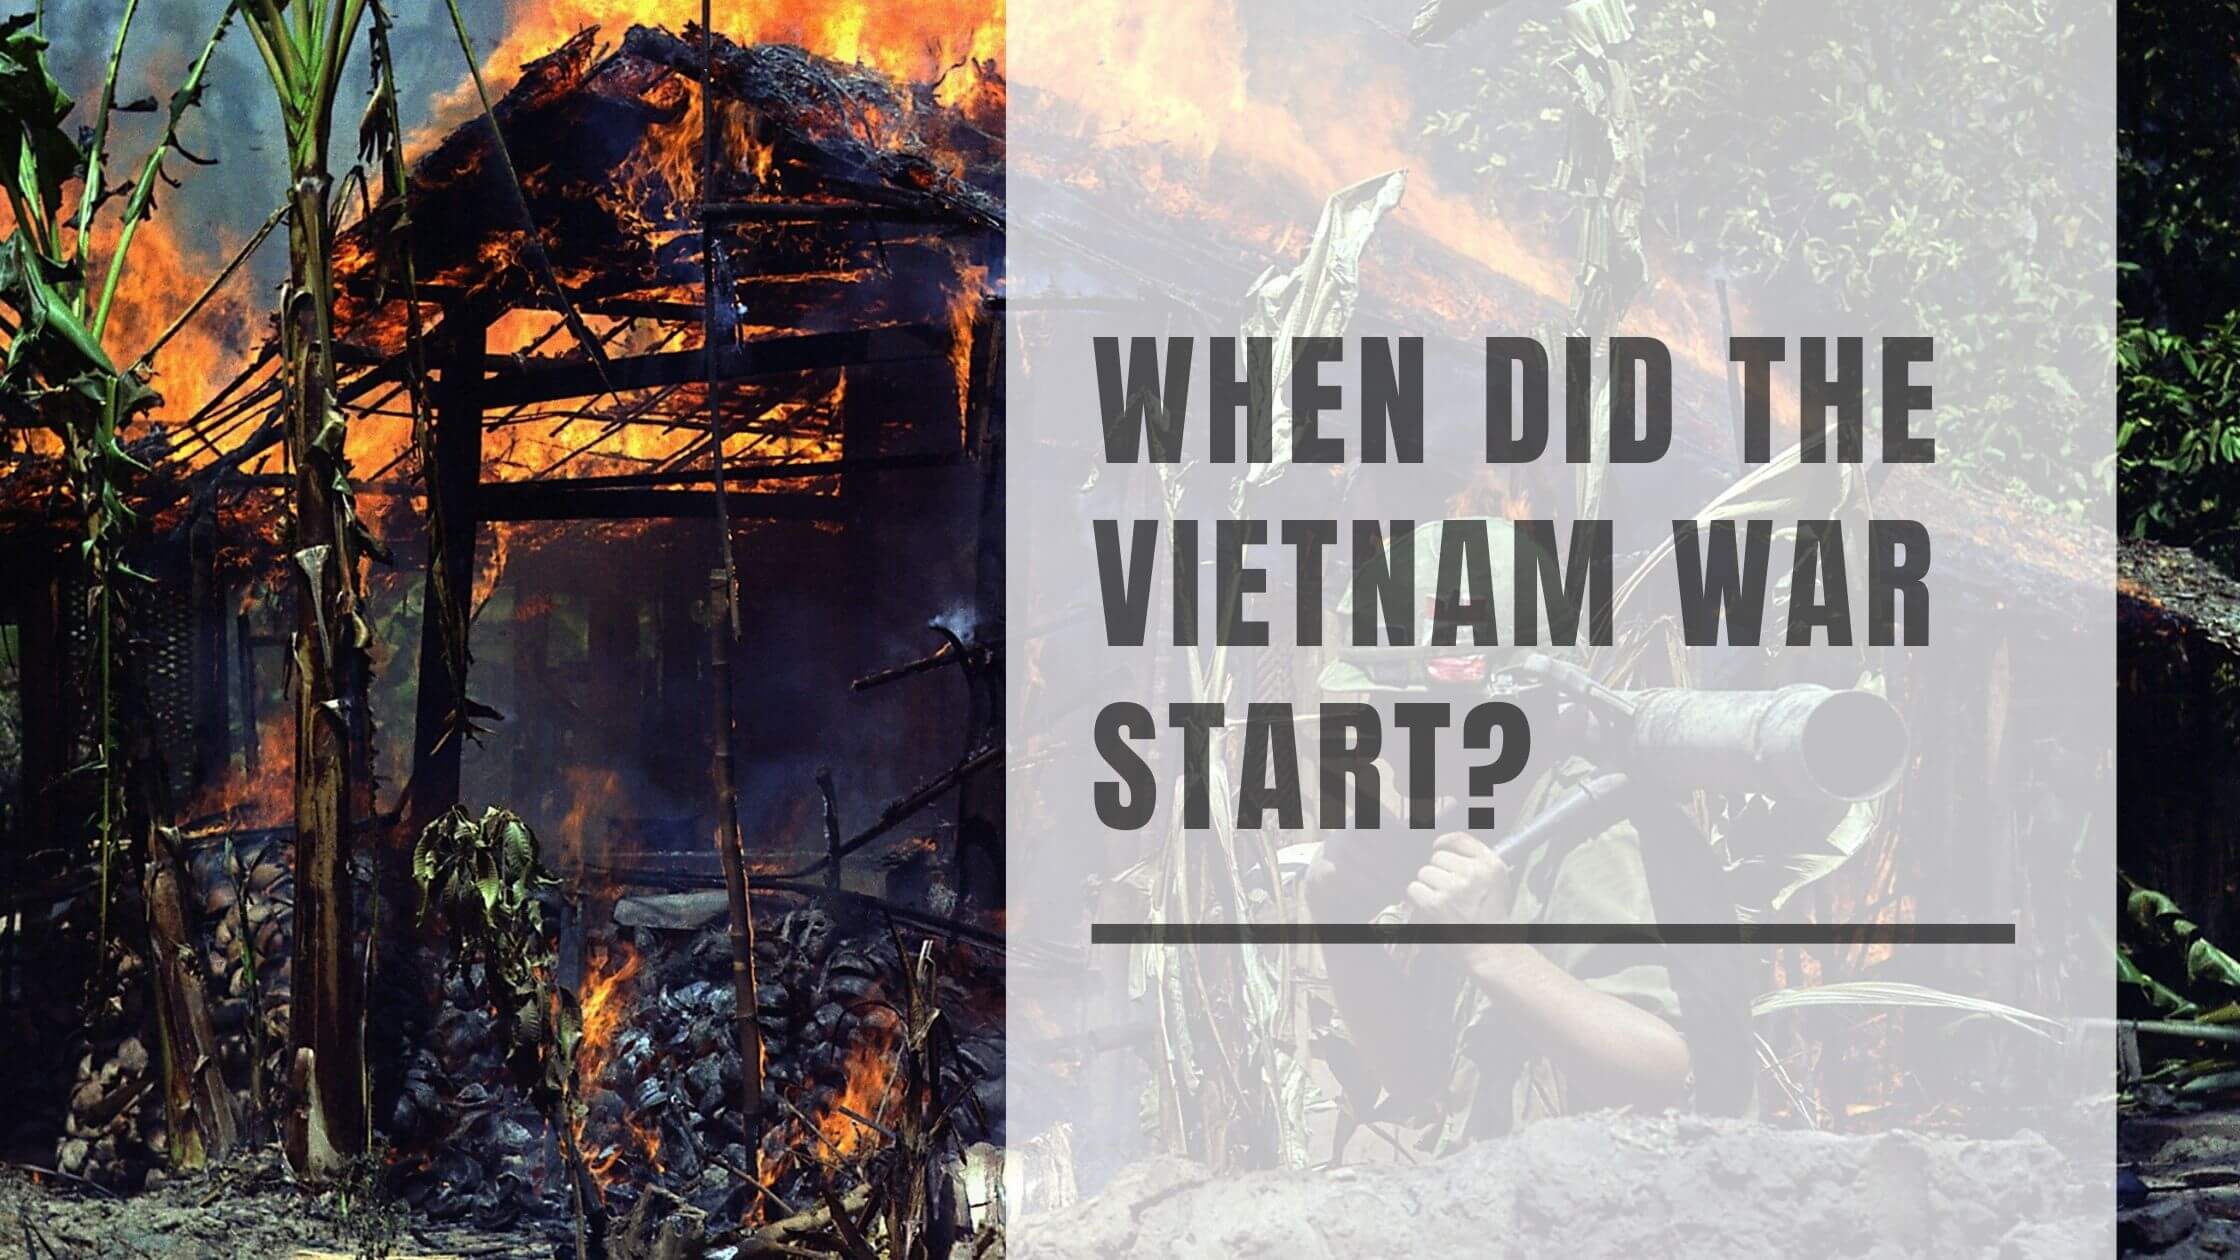 Vietnamese home on fire